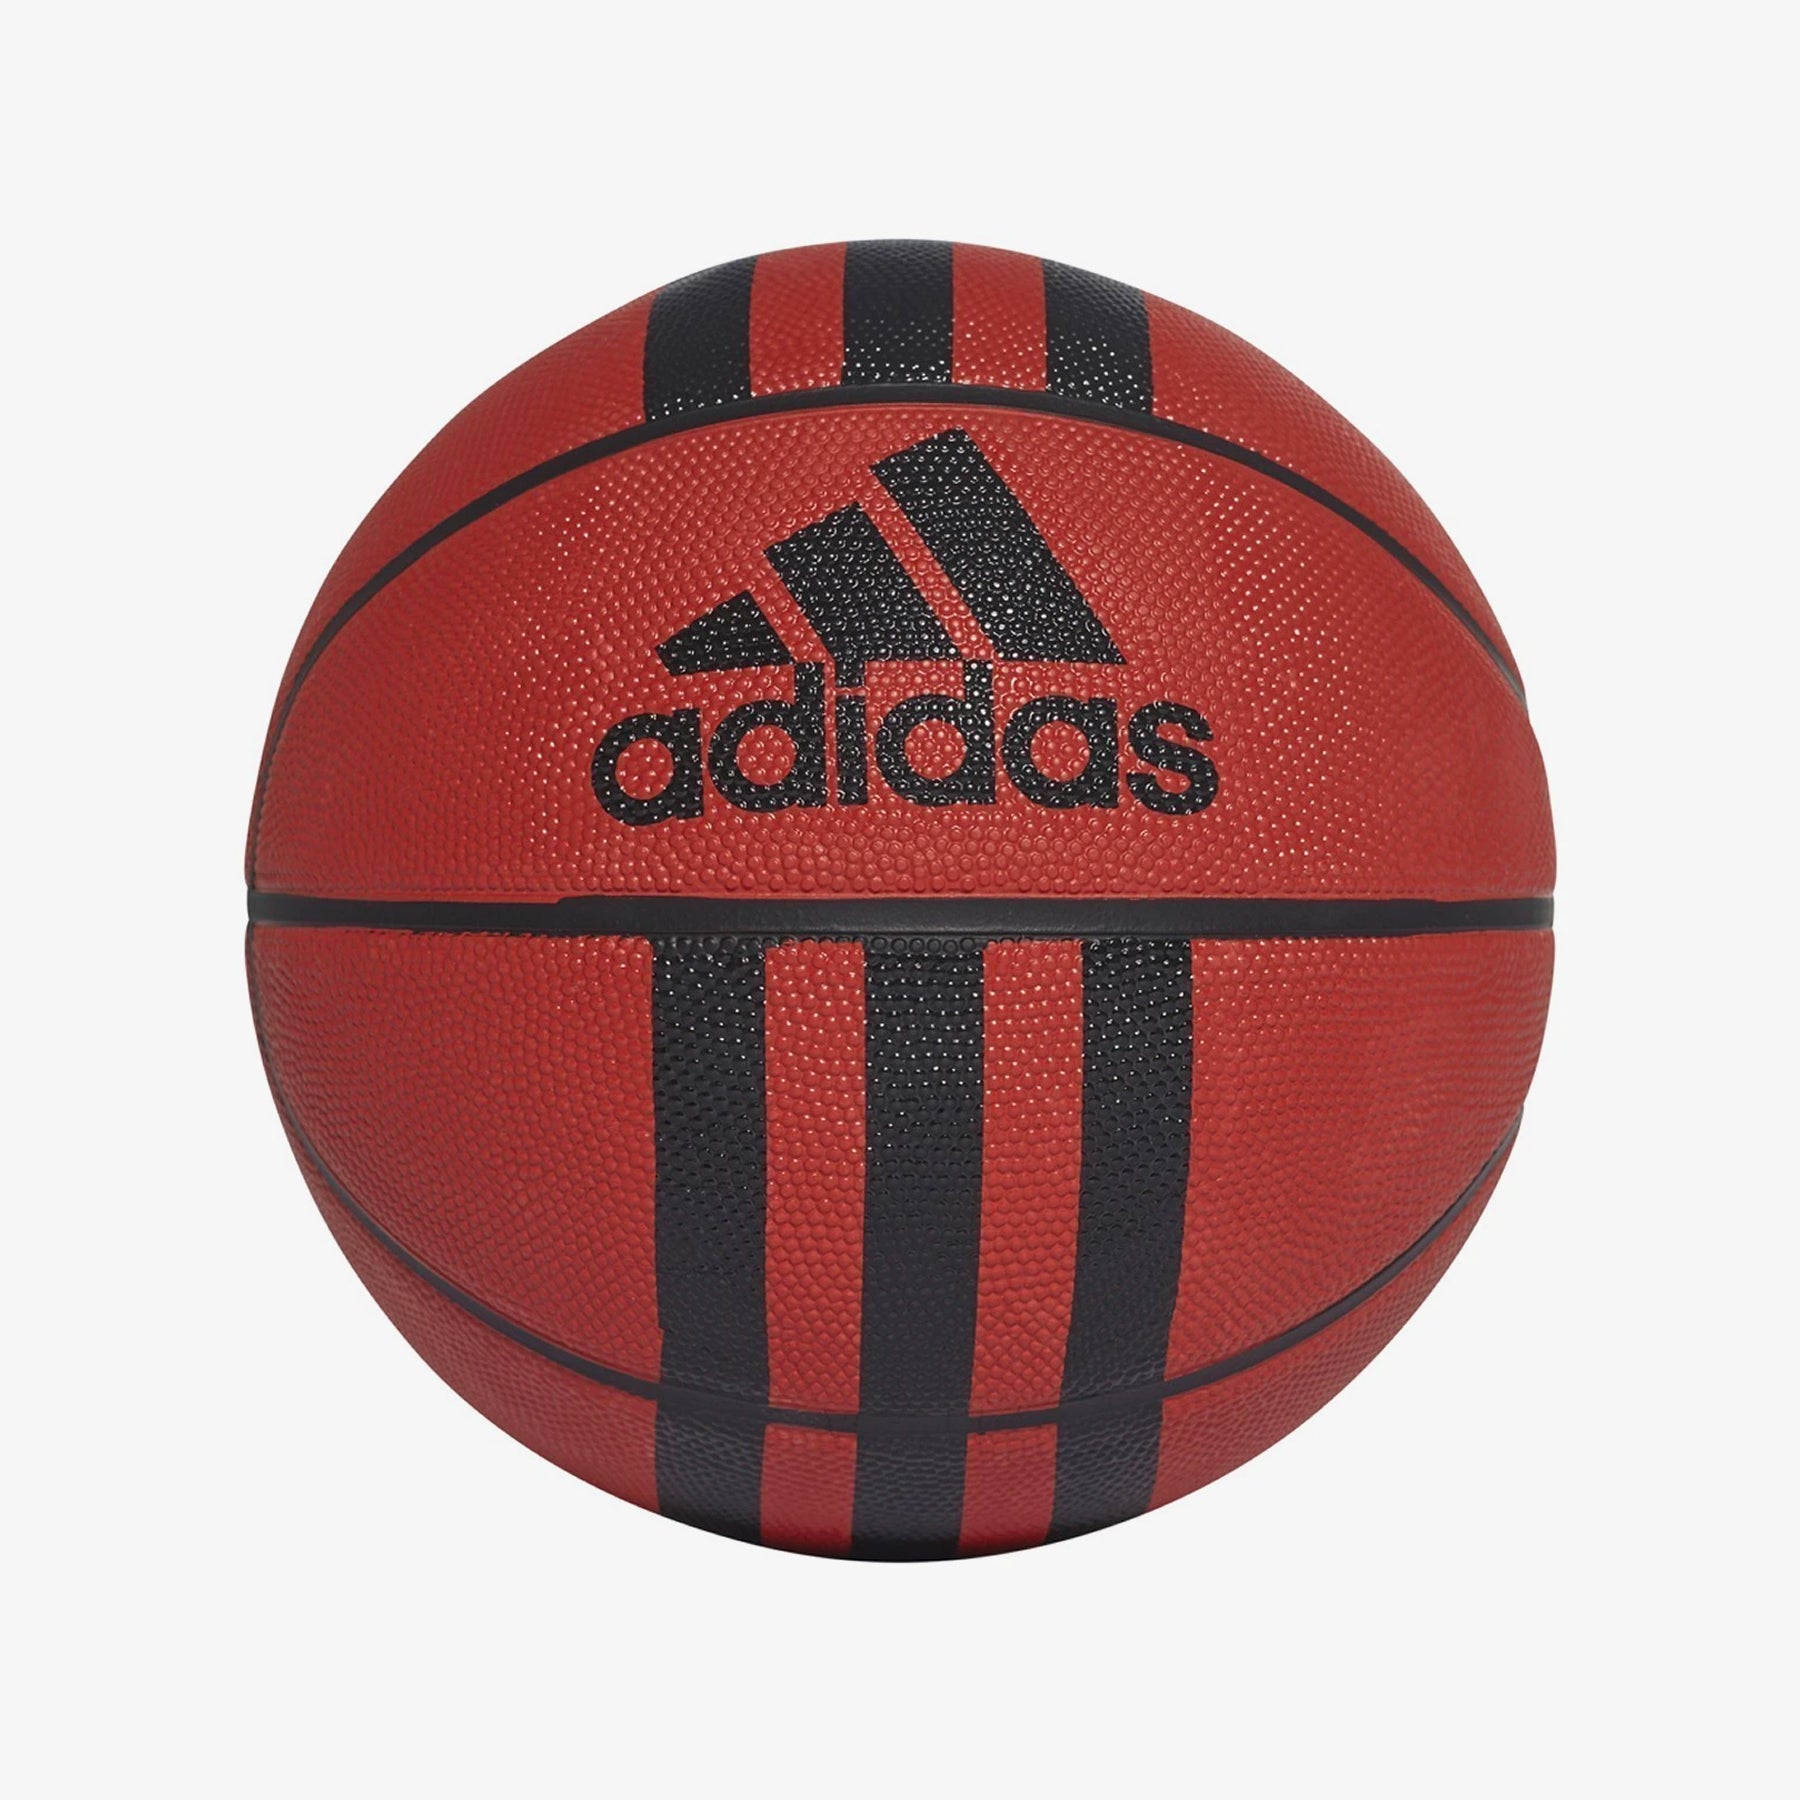 3 Stripe D 29.5 Basketball